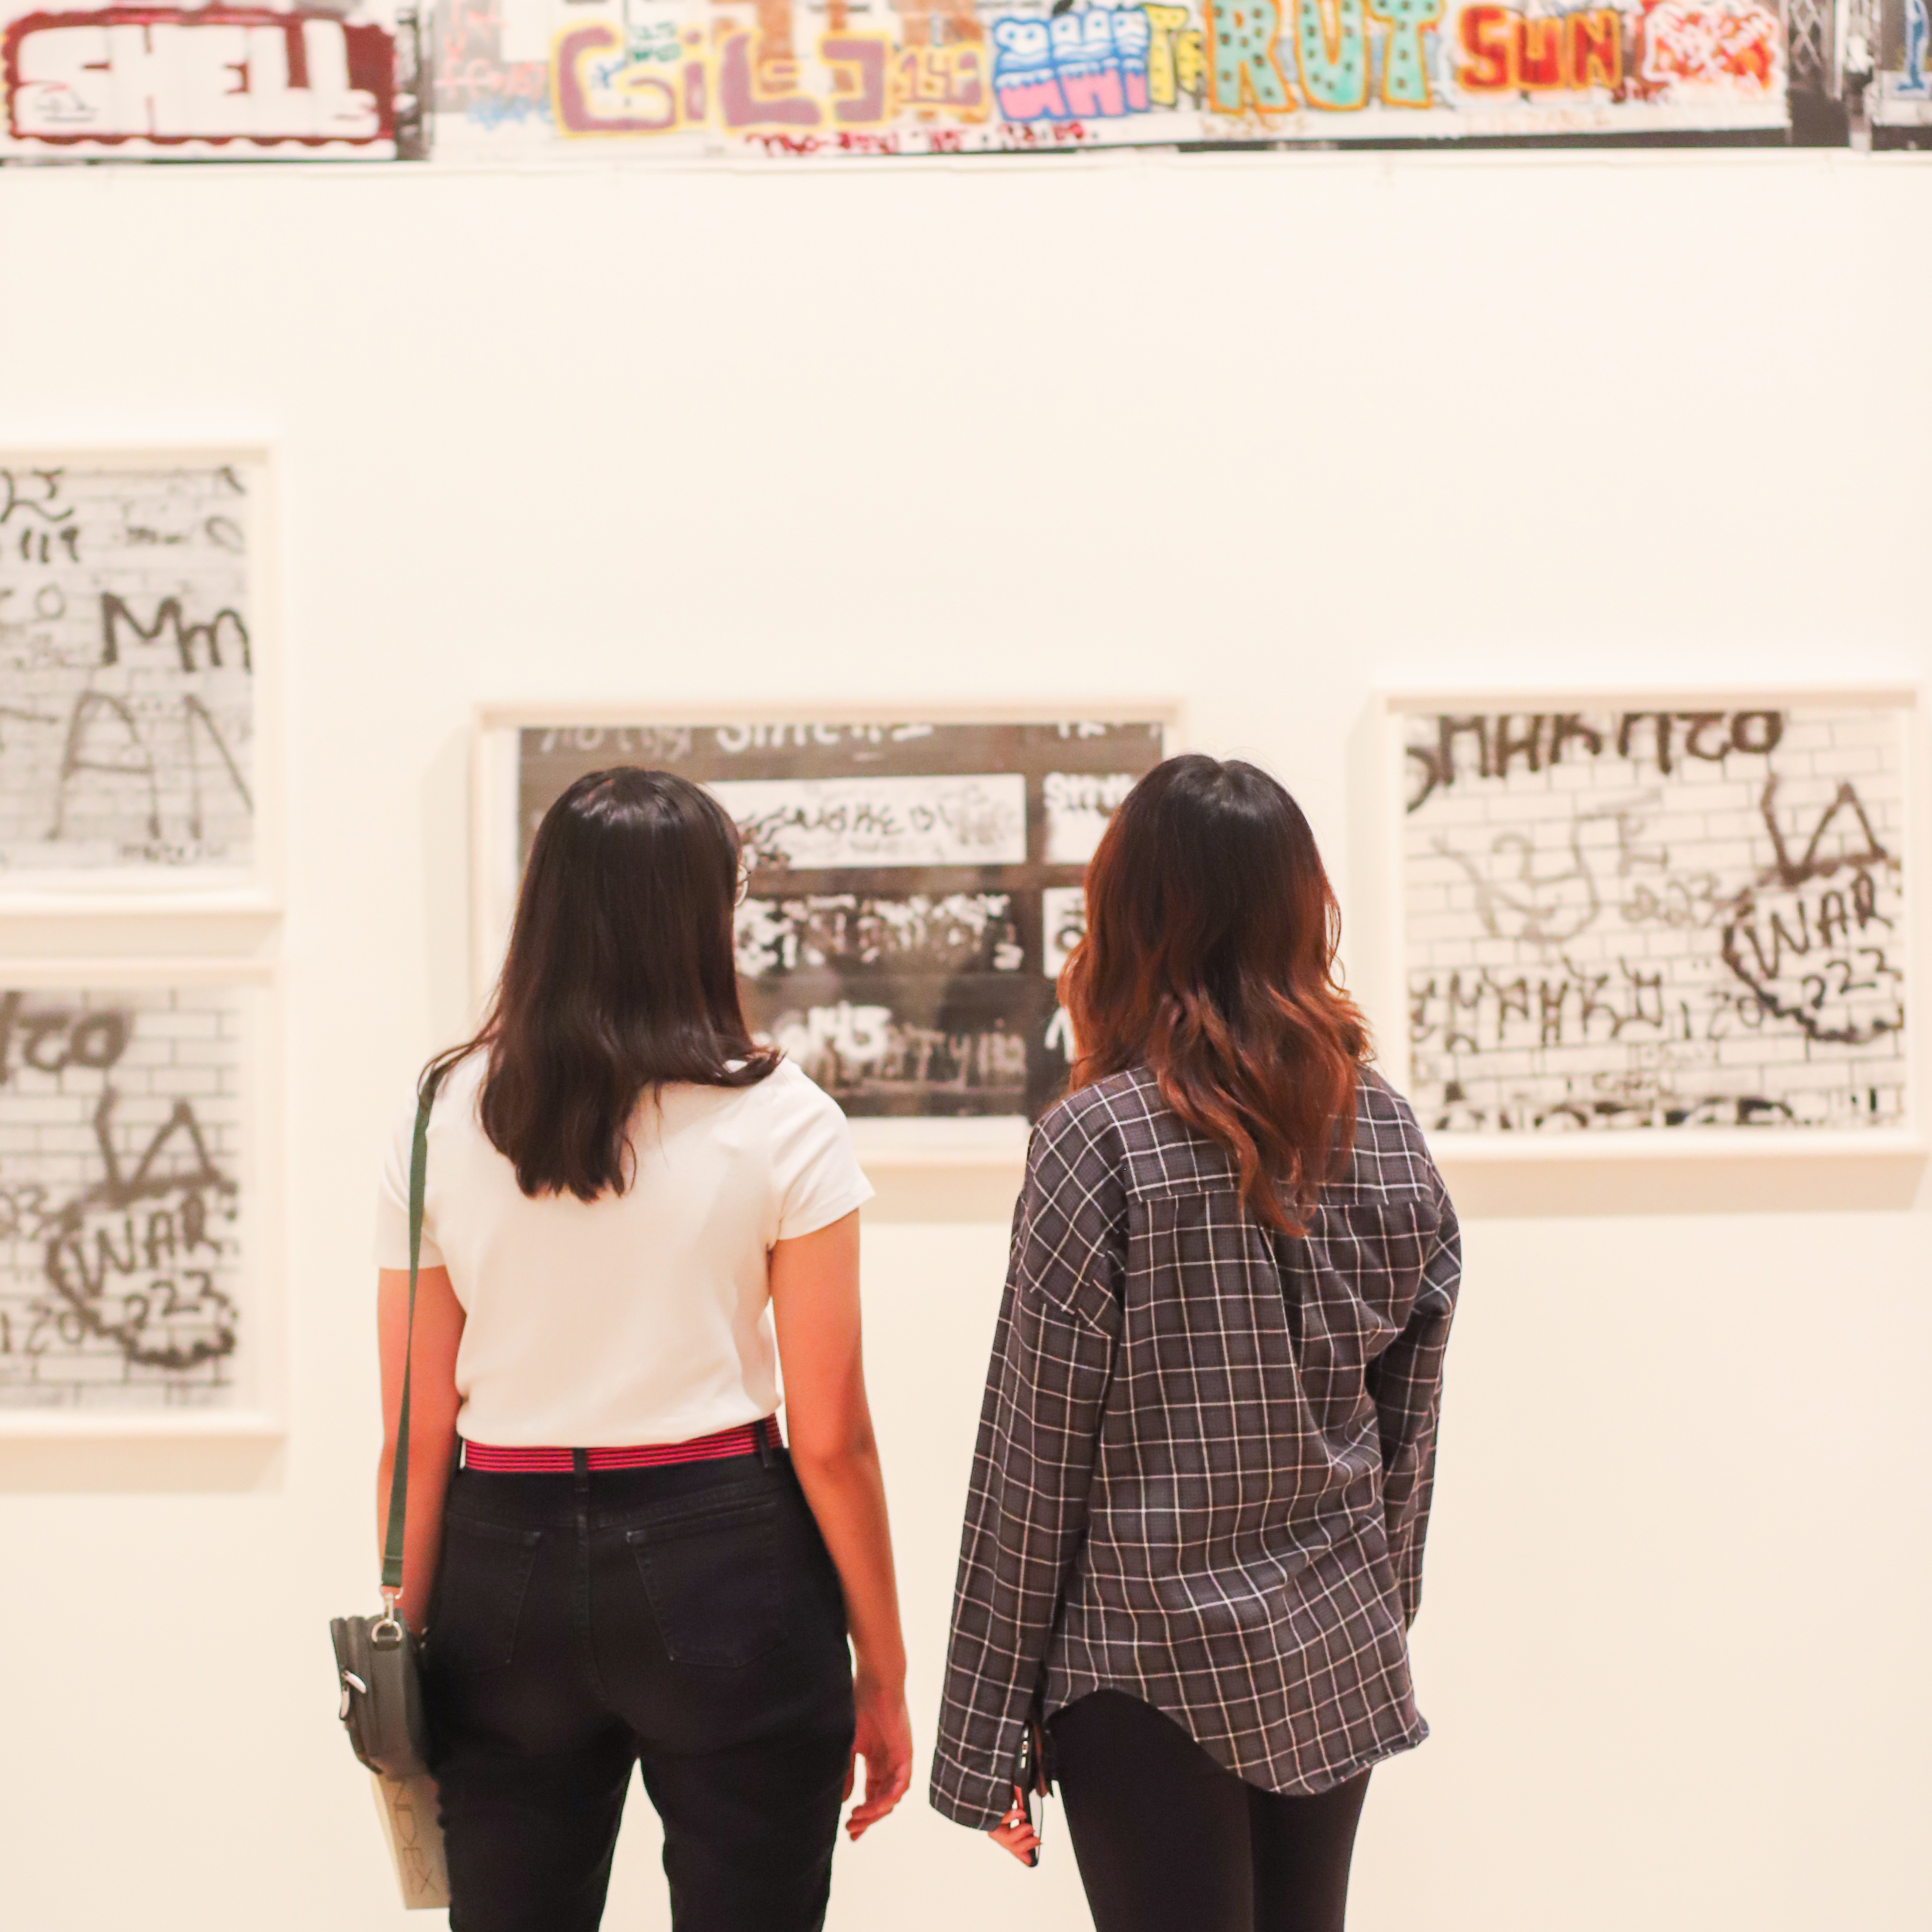 Two students looking at photographs of graffiti